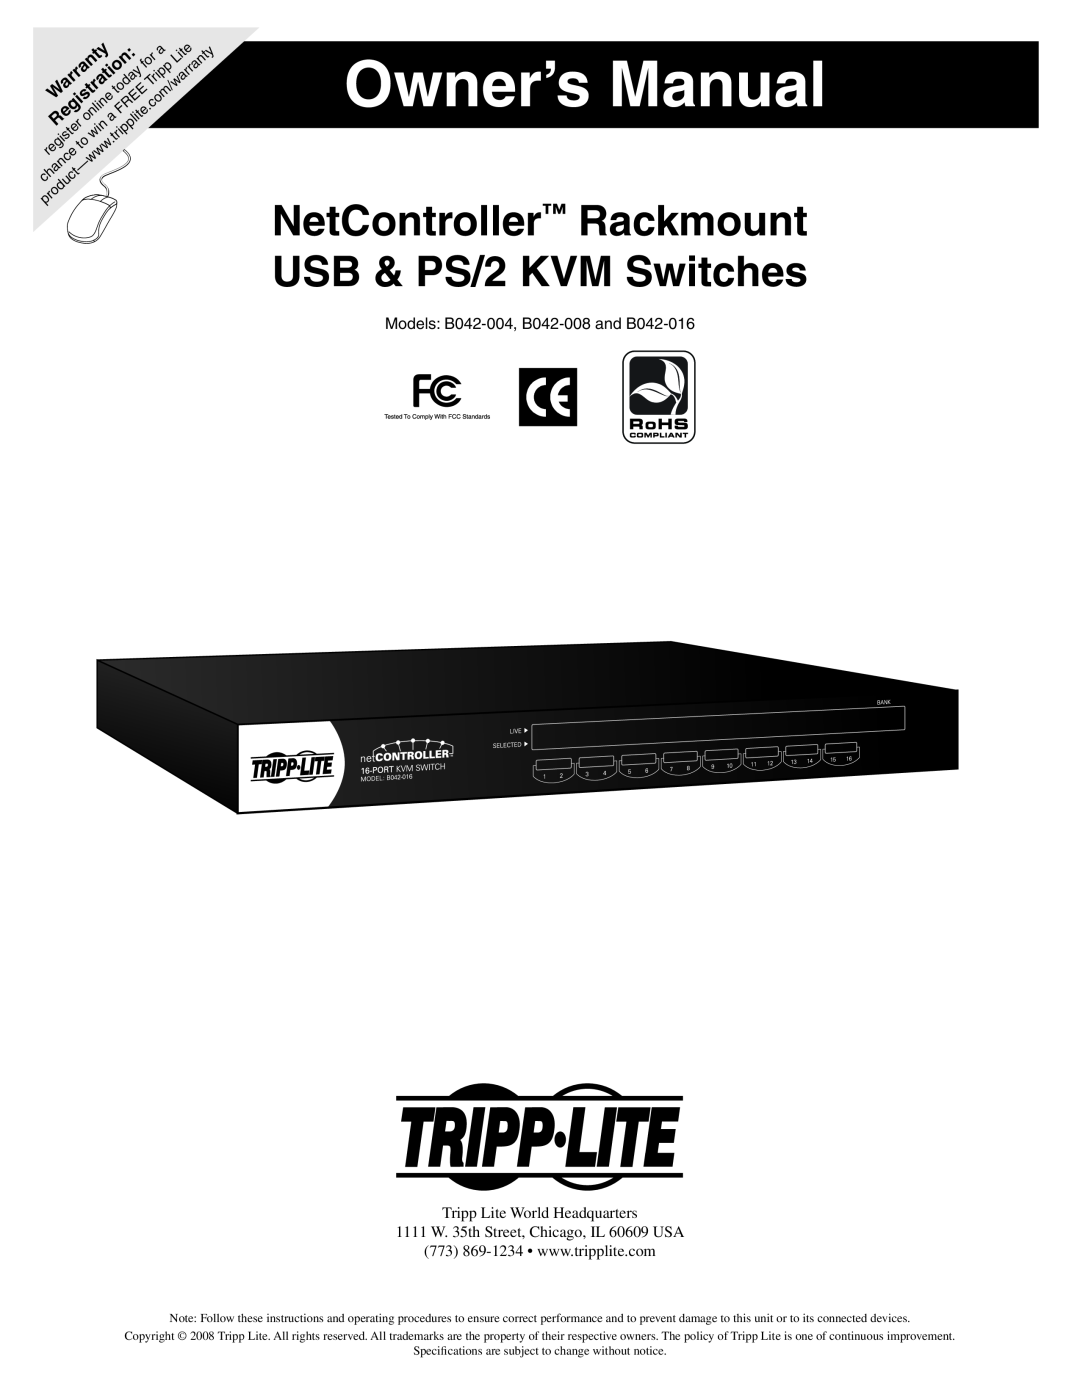 Tripp Lite B042-008 owner manual Owner’s Manual, NetController Rackmount USB & PS/2 KVM Switches, Warranty, Registration 